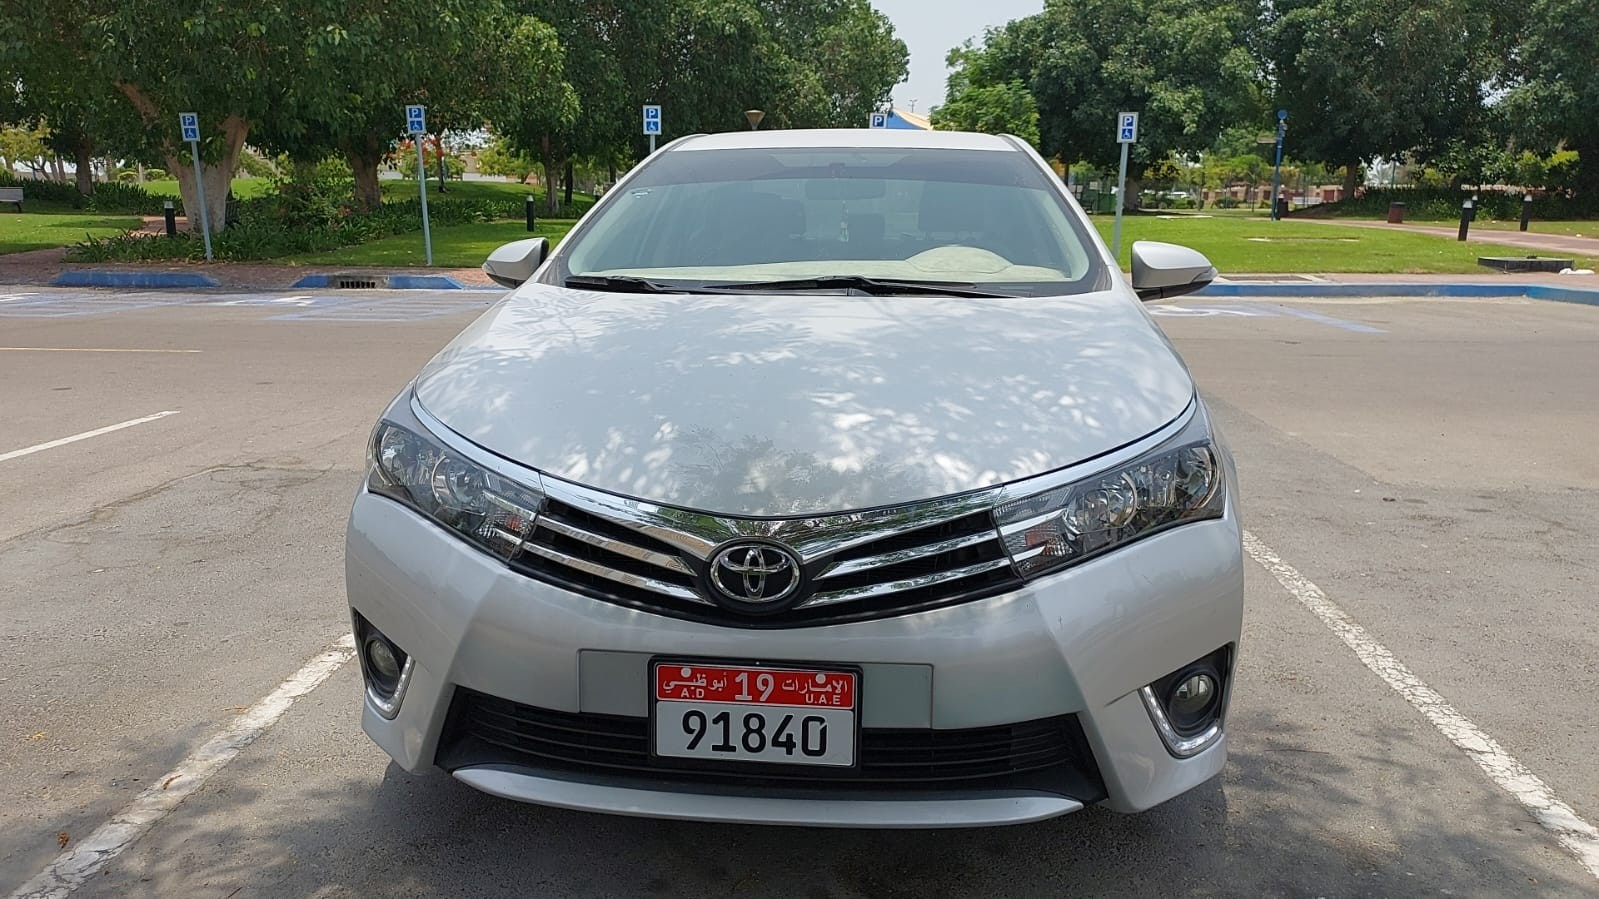 Grab bargain - Toyota corolla 2015